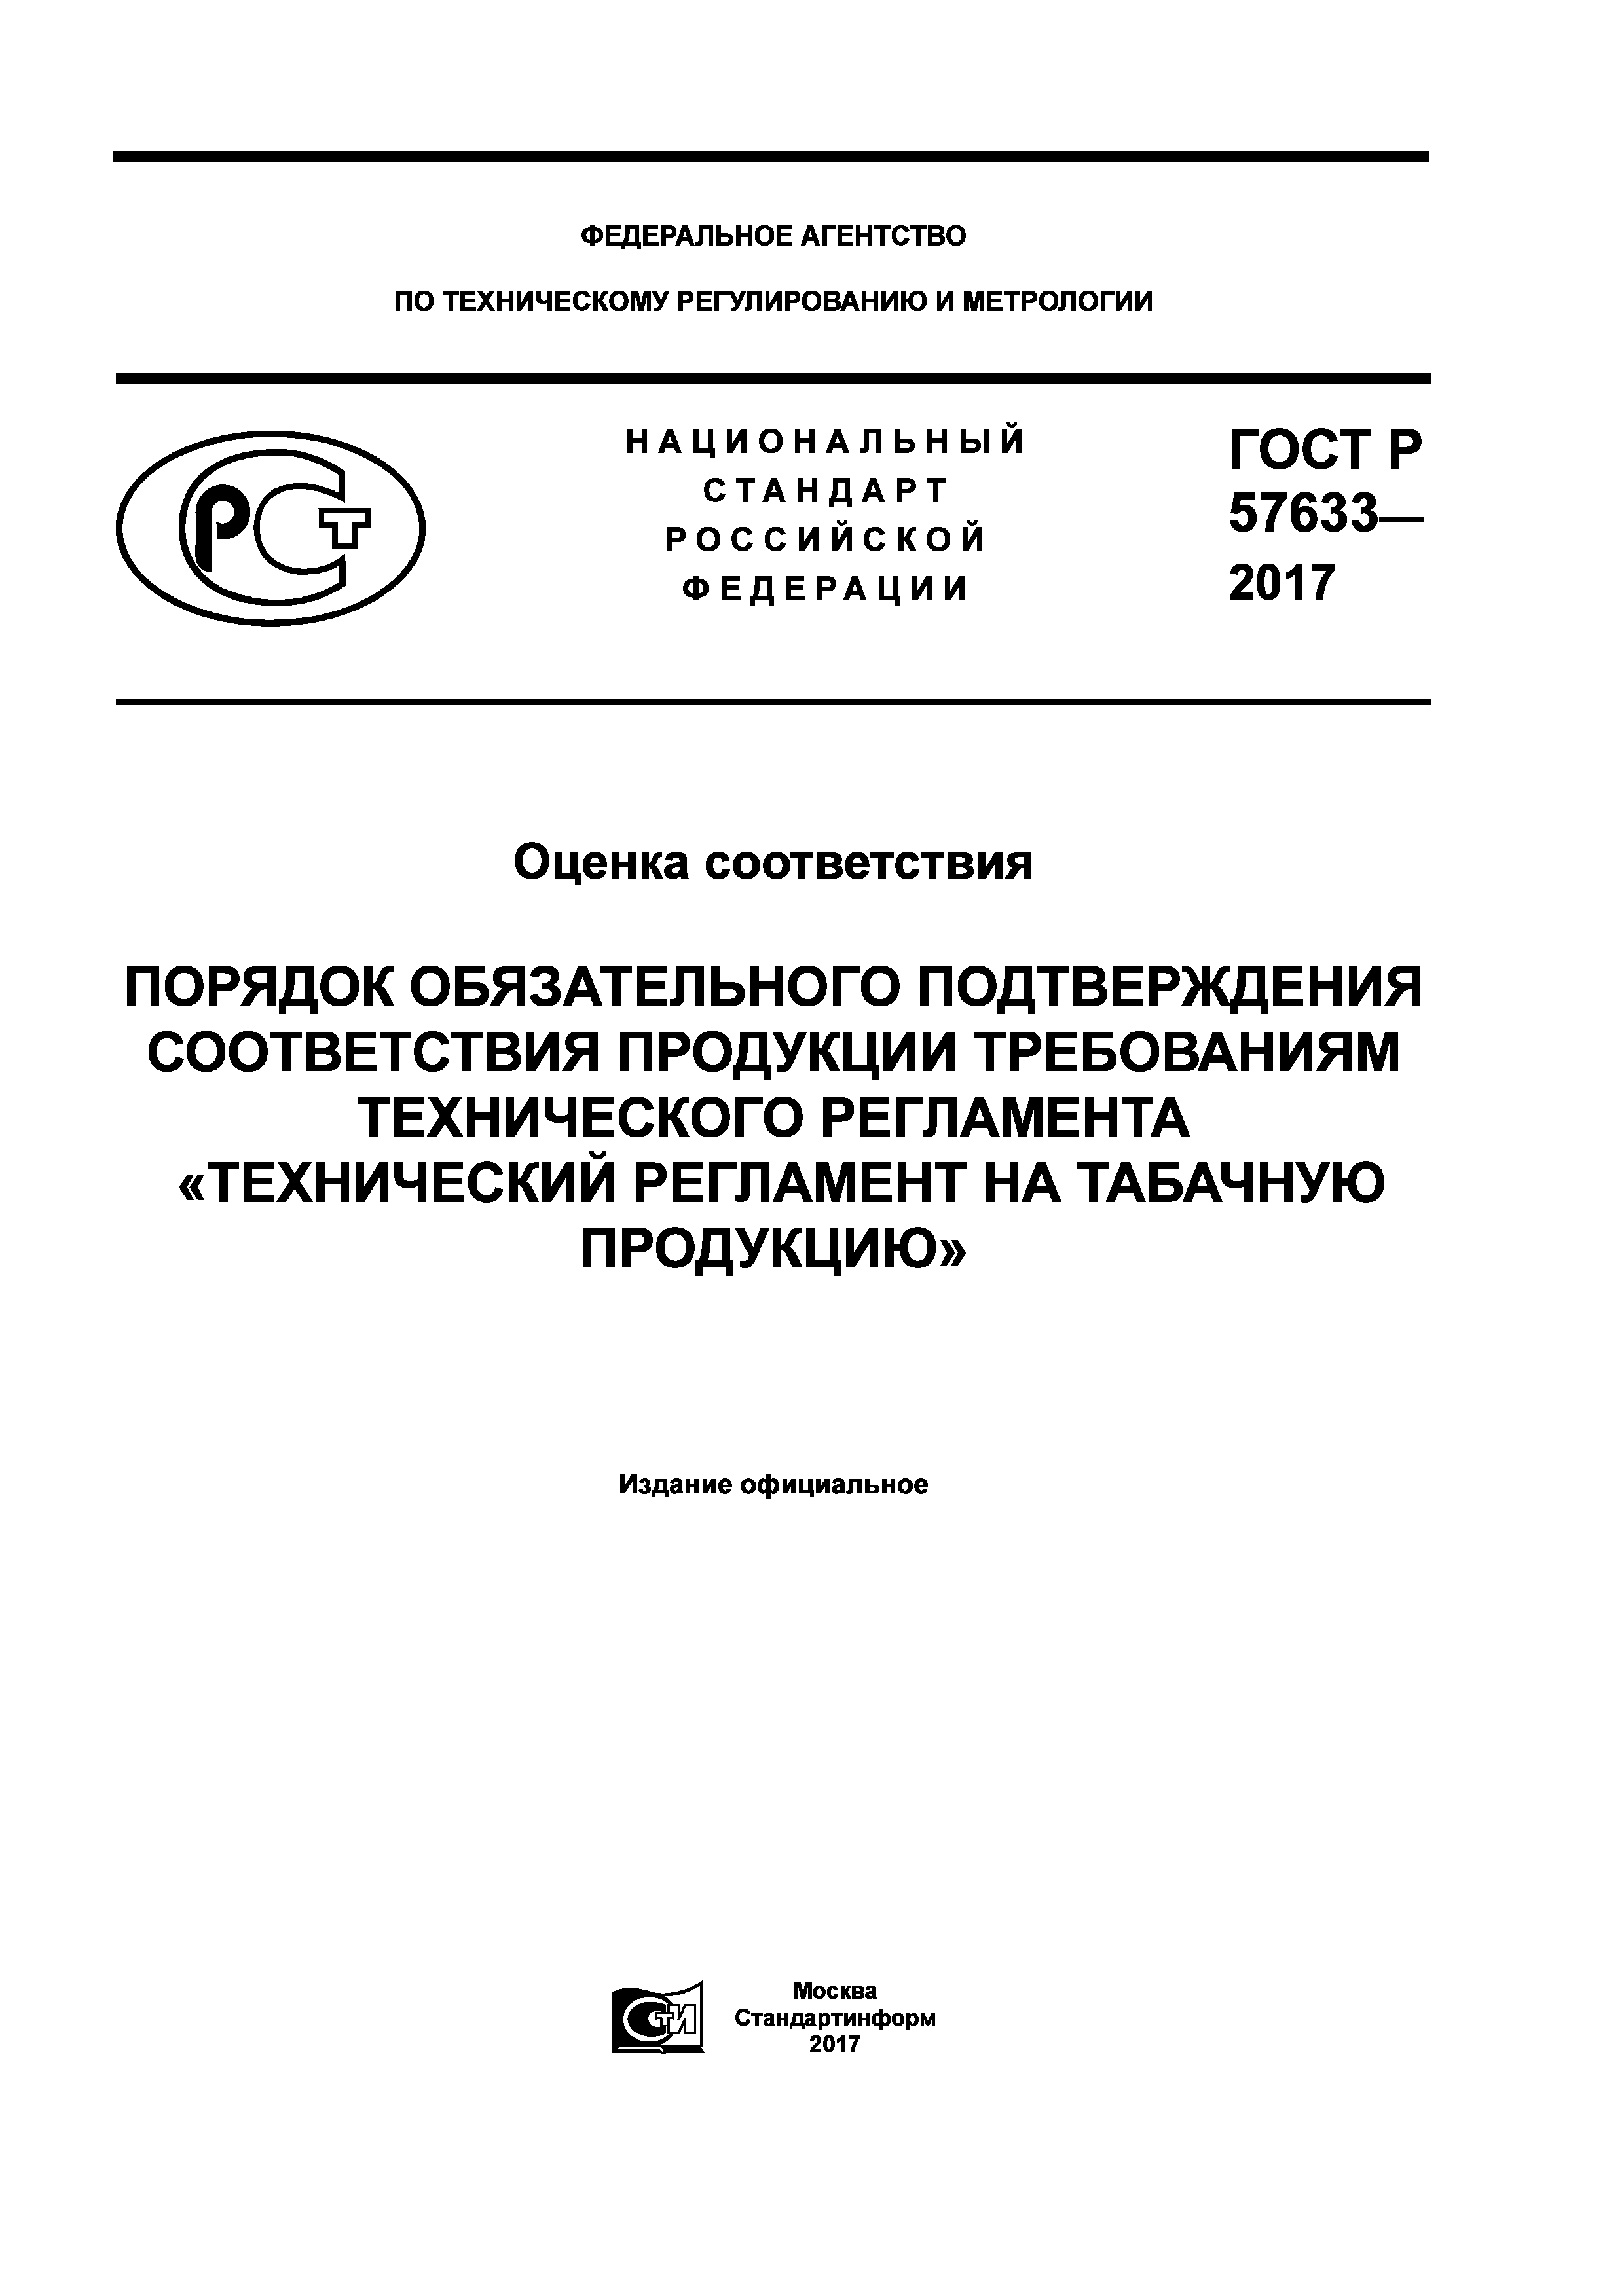 ГОСТ Р 57633-2017